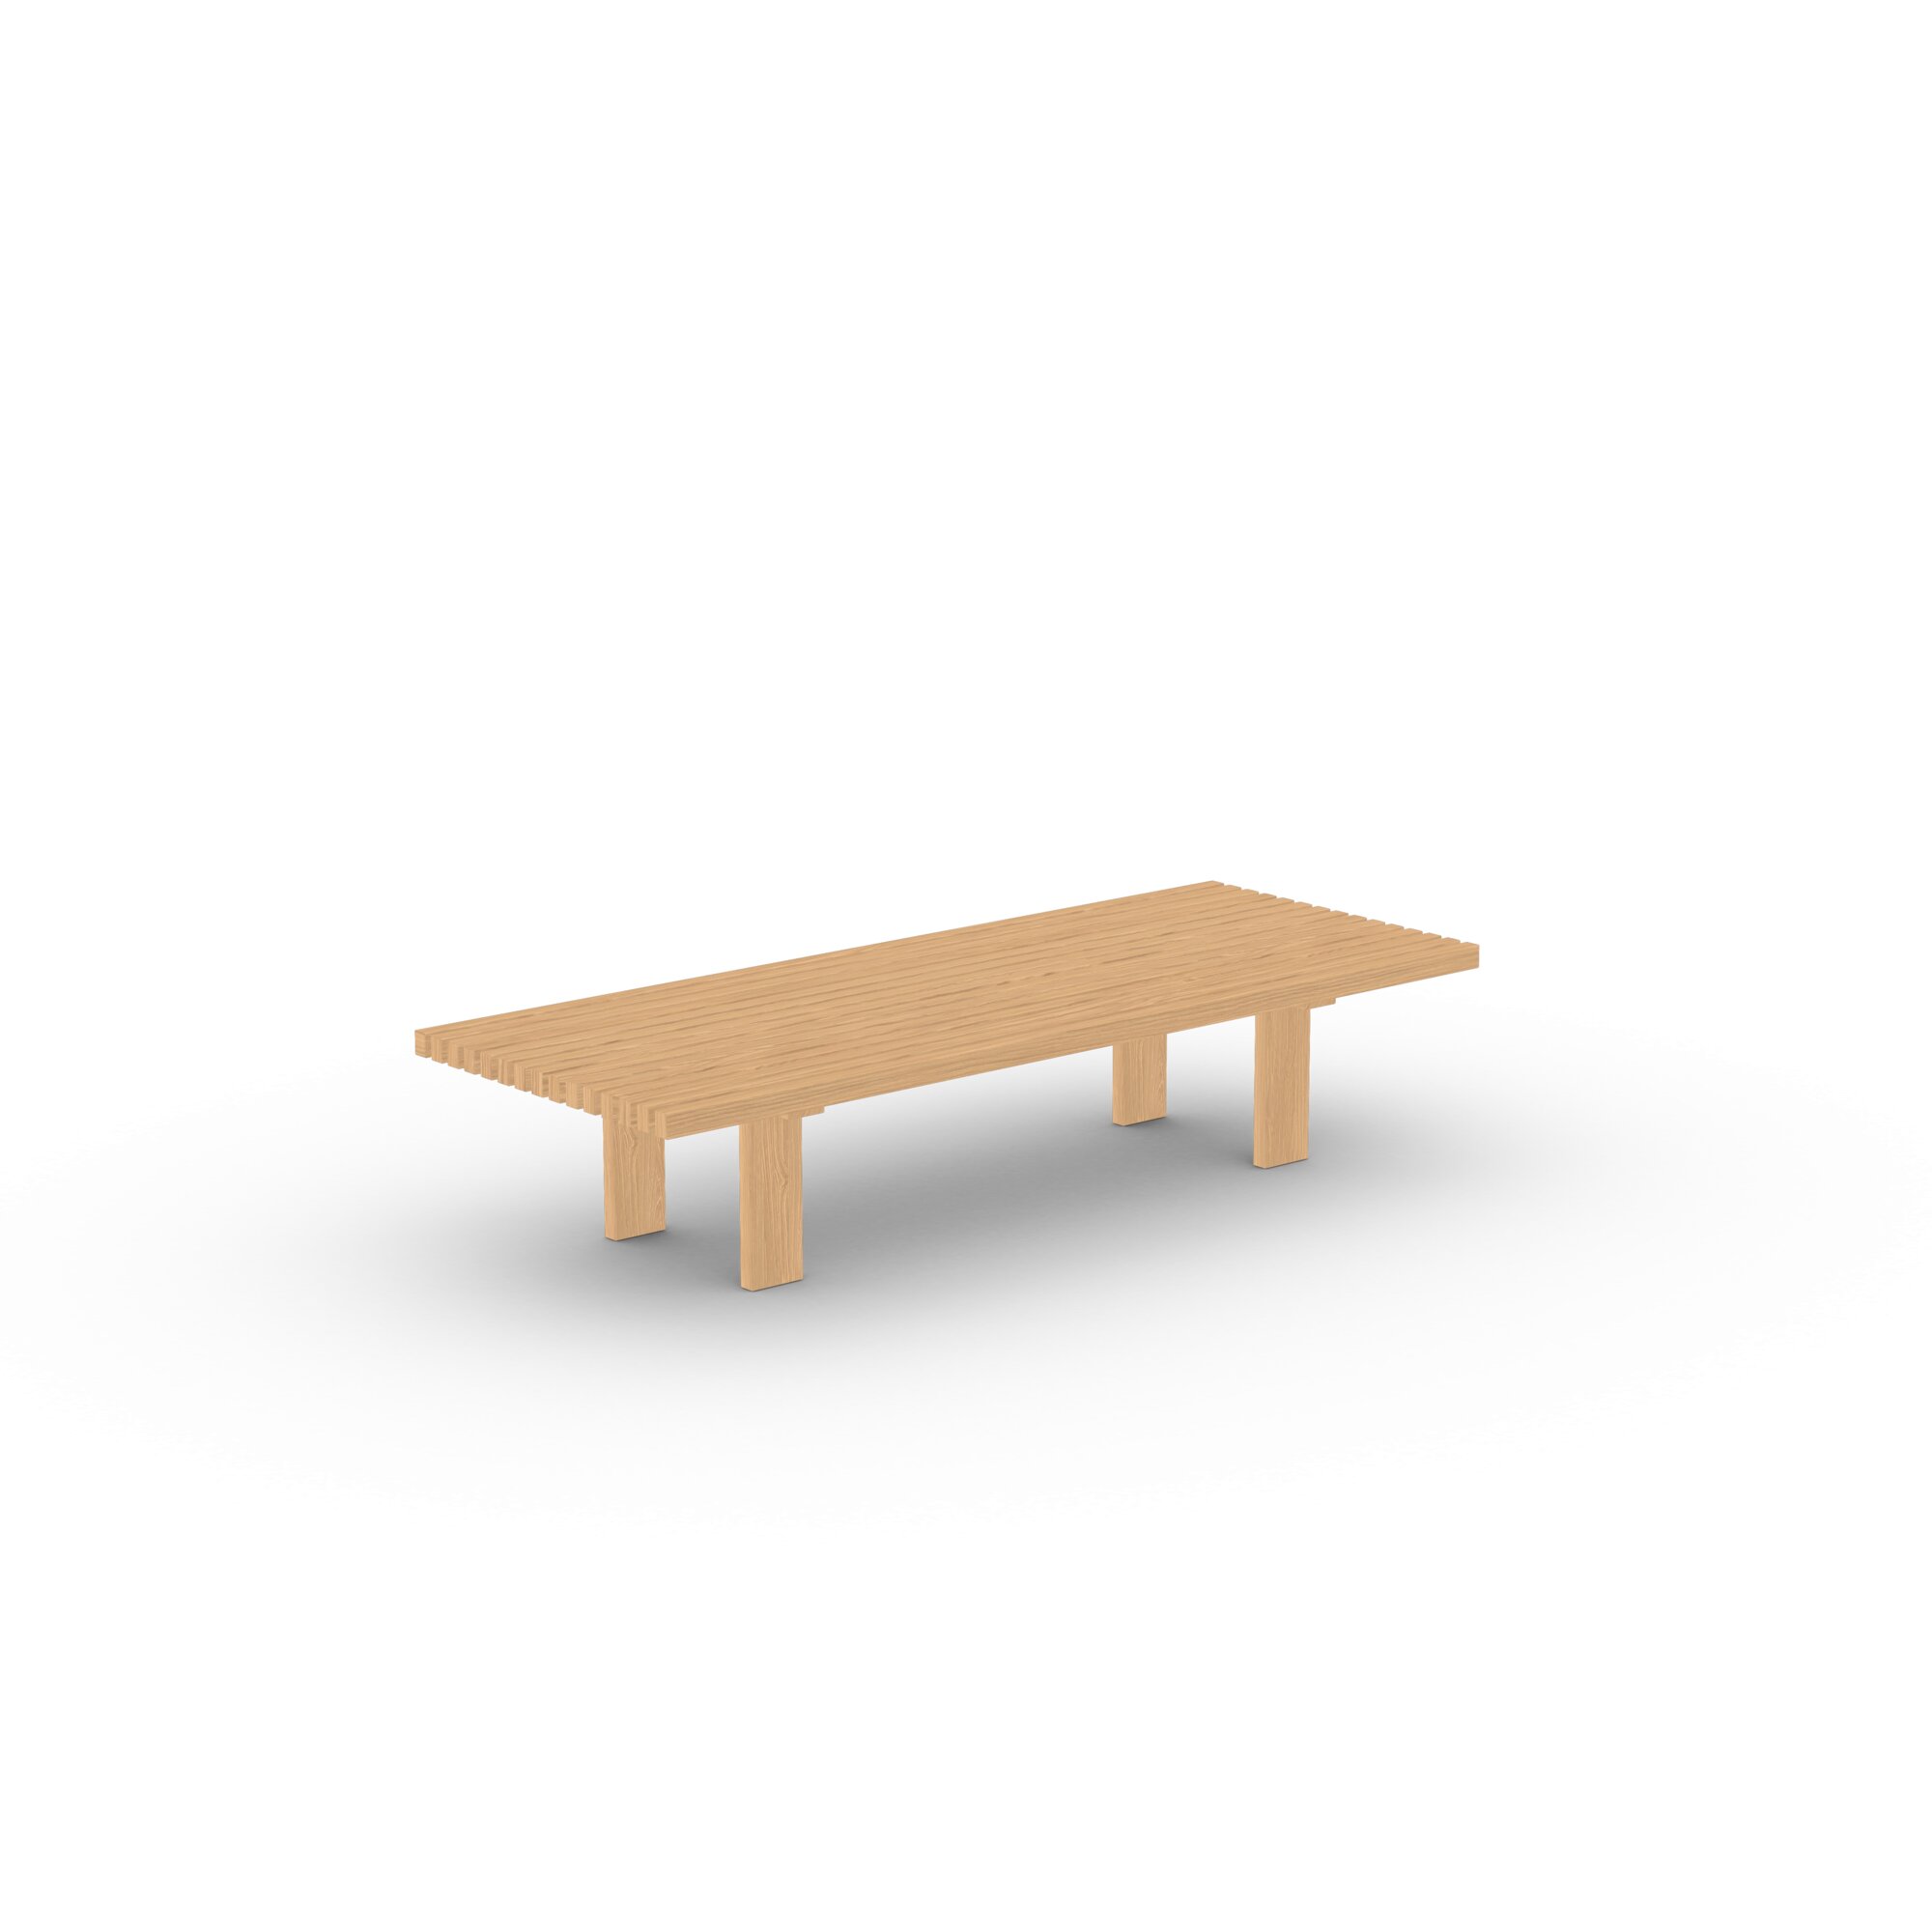 Design Coffee Table | Elements Coffee Table Oak hardwax oil natural 3062 | Oak hardwax oil natural 3062 | Studio HENK| 